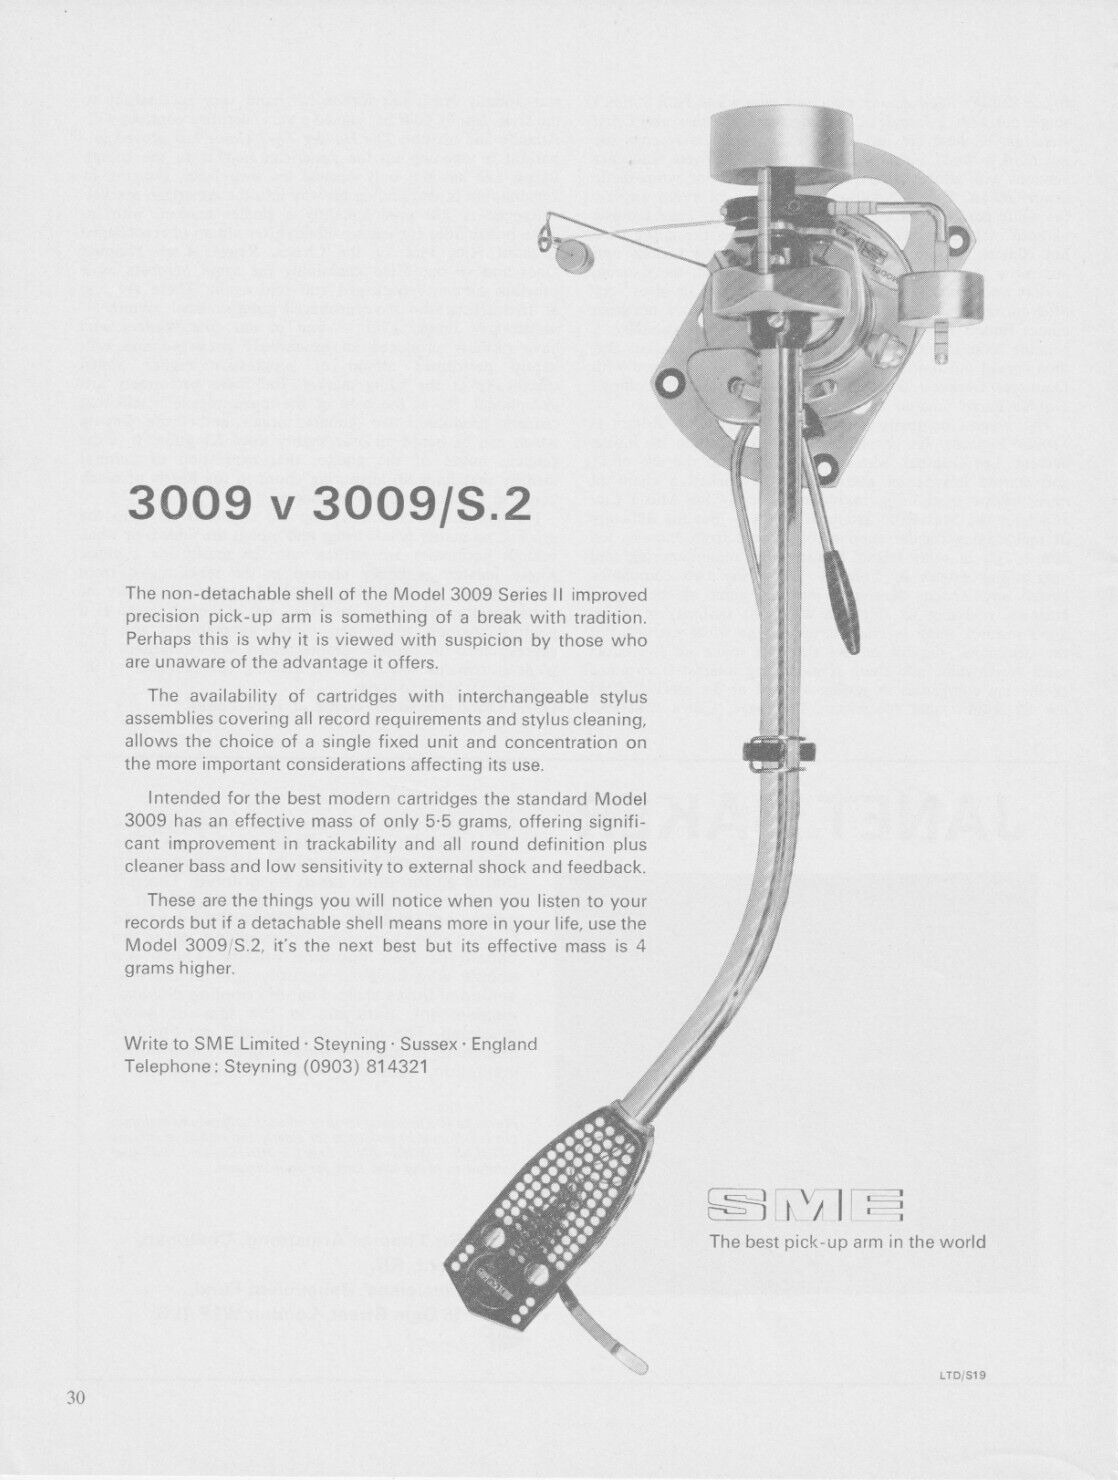 1973 SME 3009 v 3009/S.2 Stereo Turntable Pick Up Arm Vintage Print Ad VG